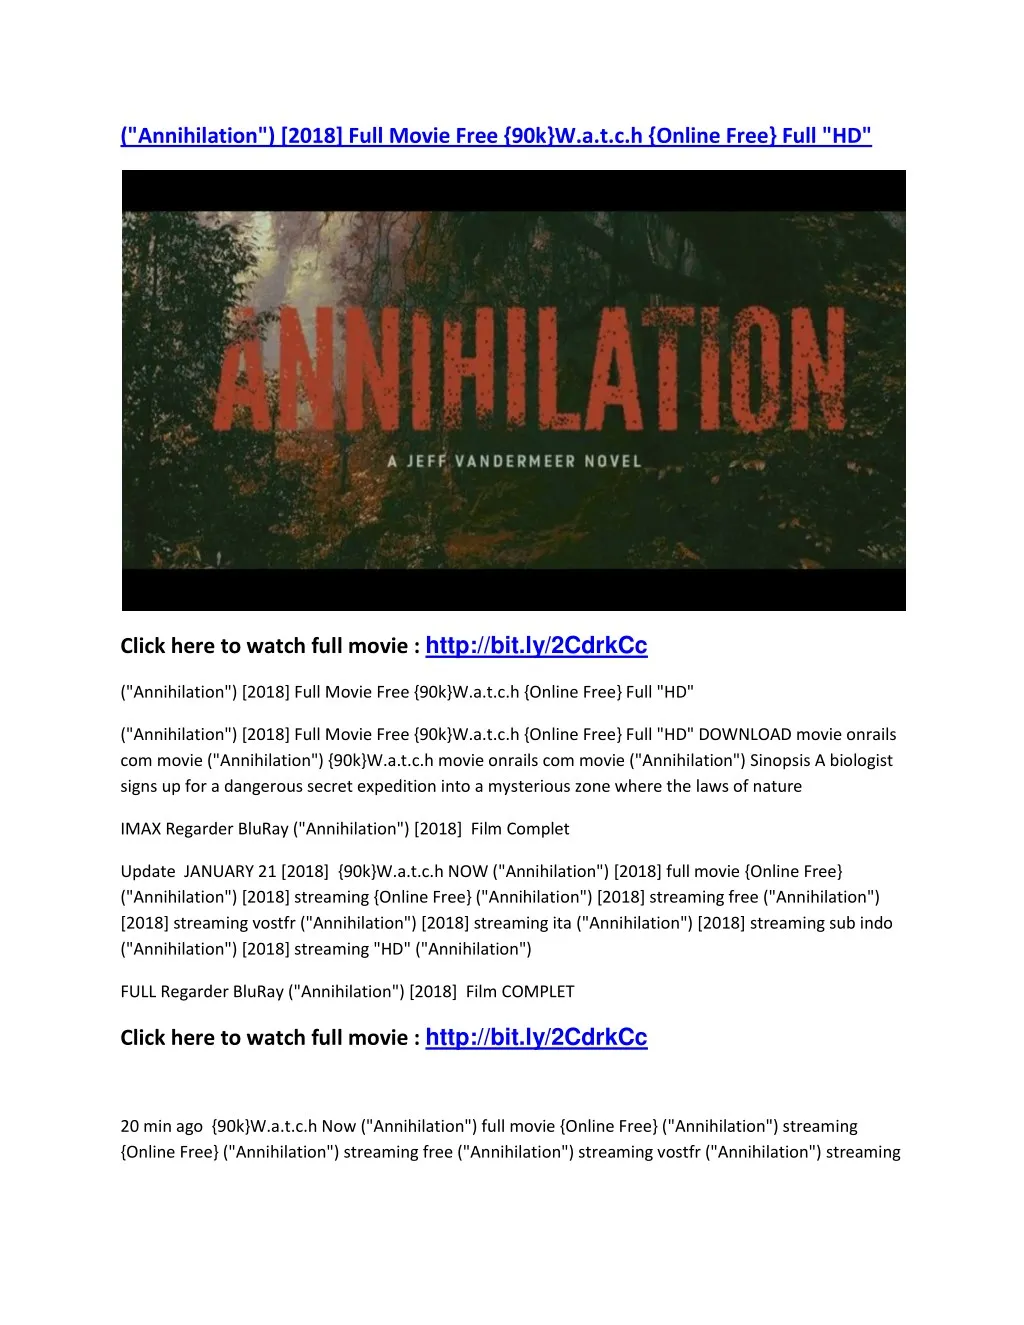 annihilation 2018 full movie free